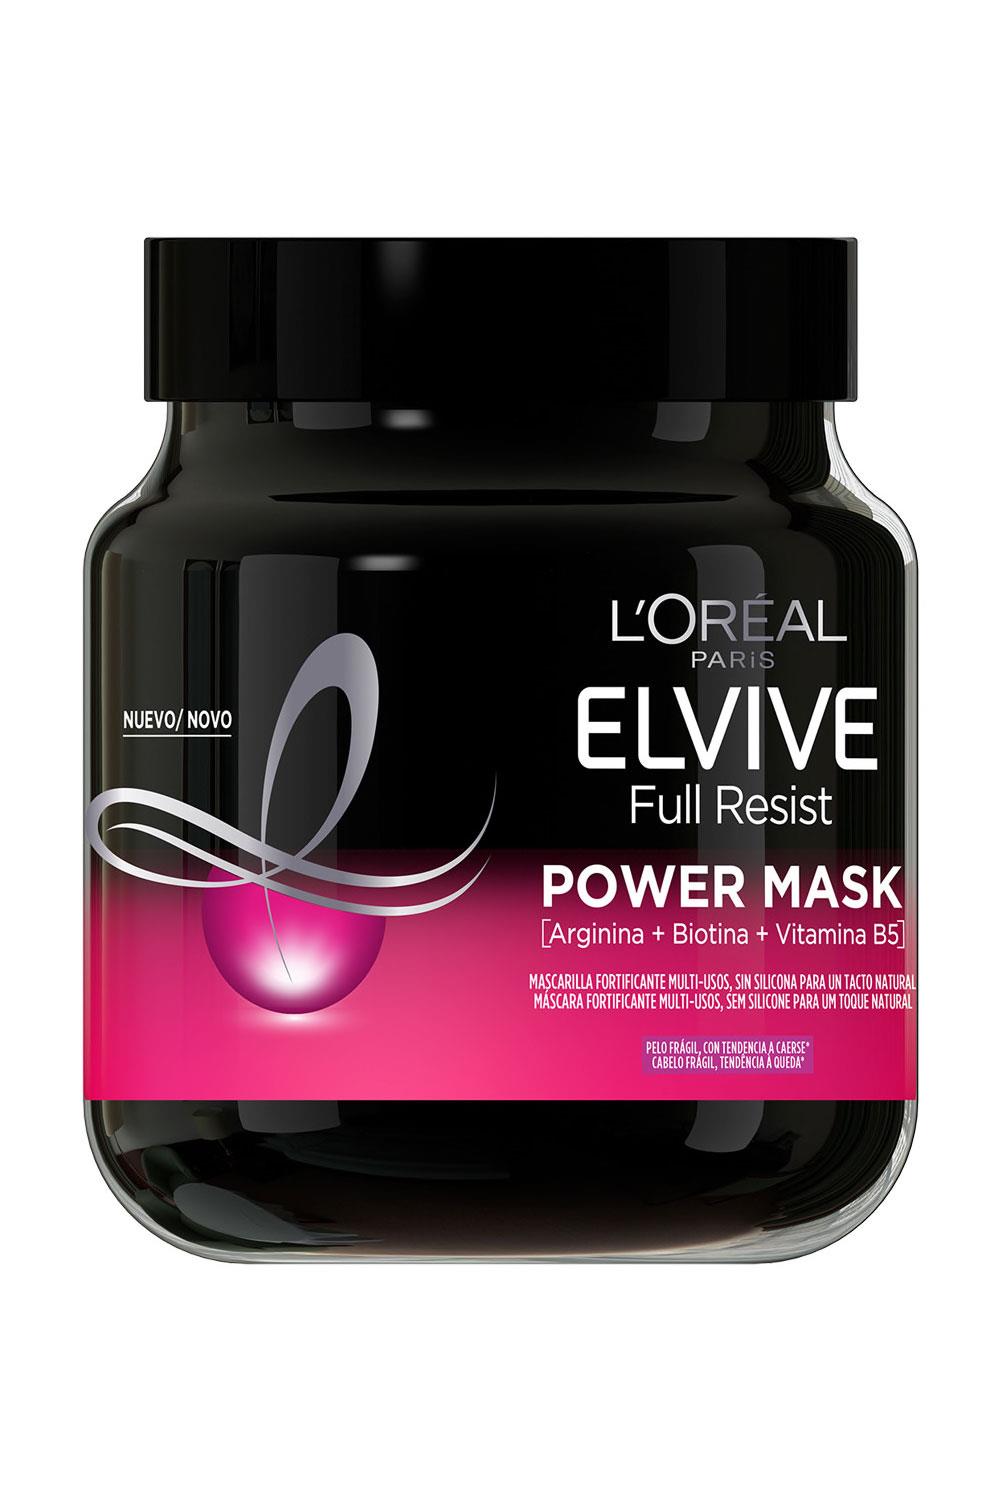 Loreal. Mascarilla fortificante Full Resist Power Mask Elvive, L'Oréal Paris